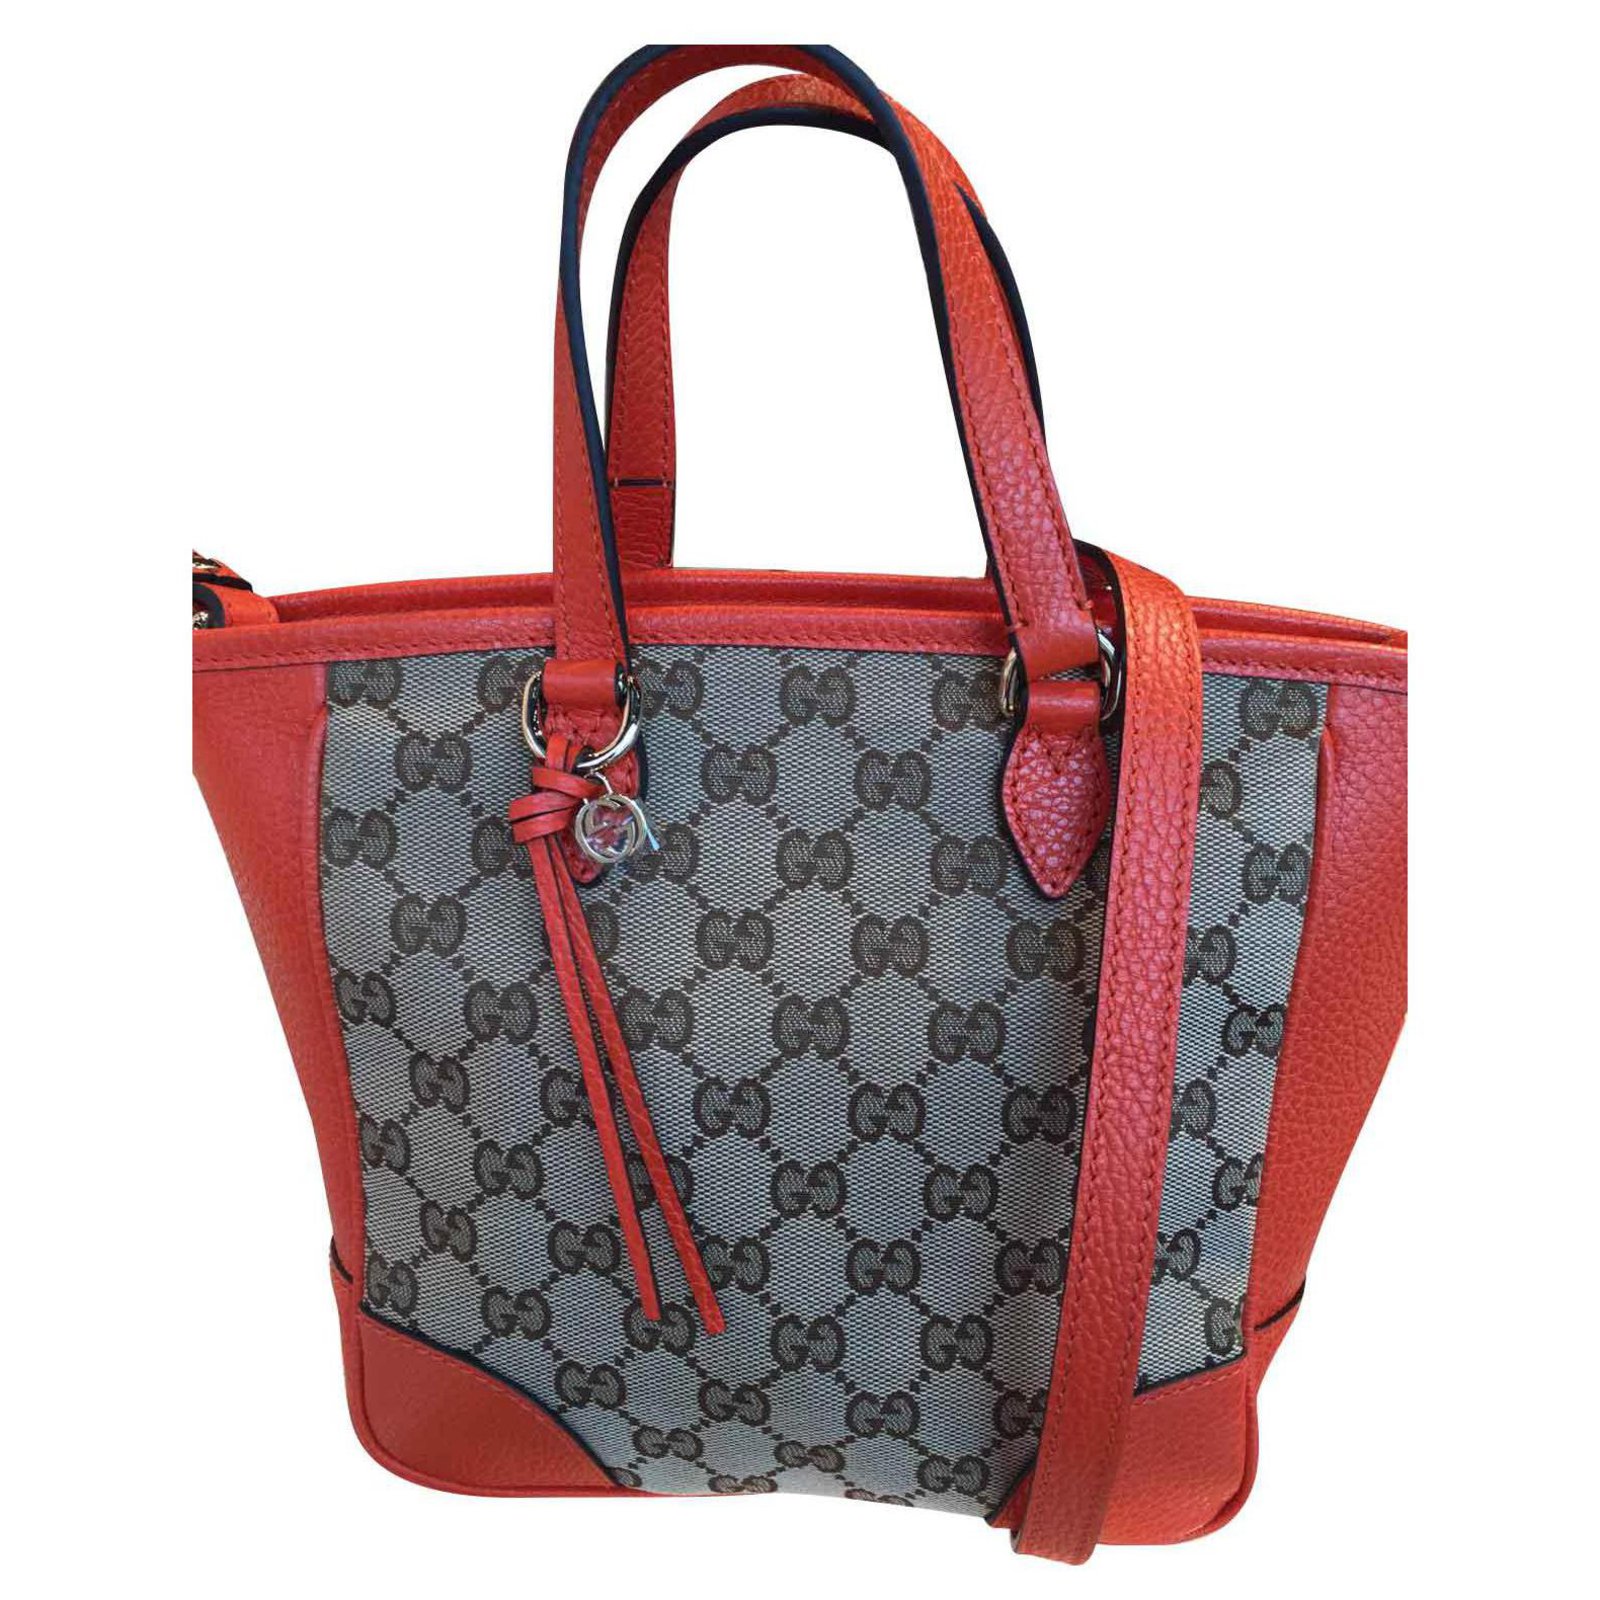 Gucci 2 Pcs New Set – Bag and Sneakers – peehe